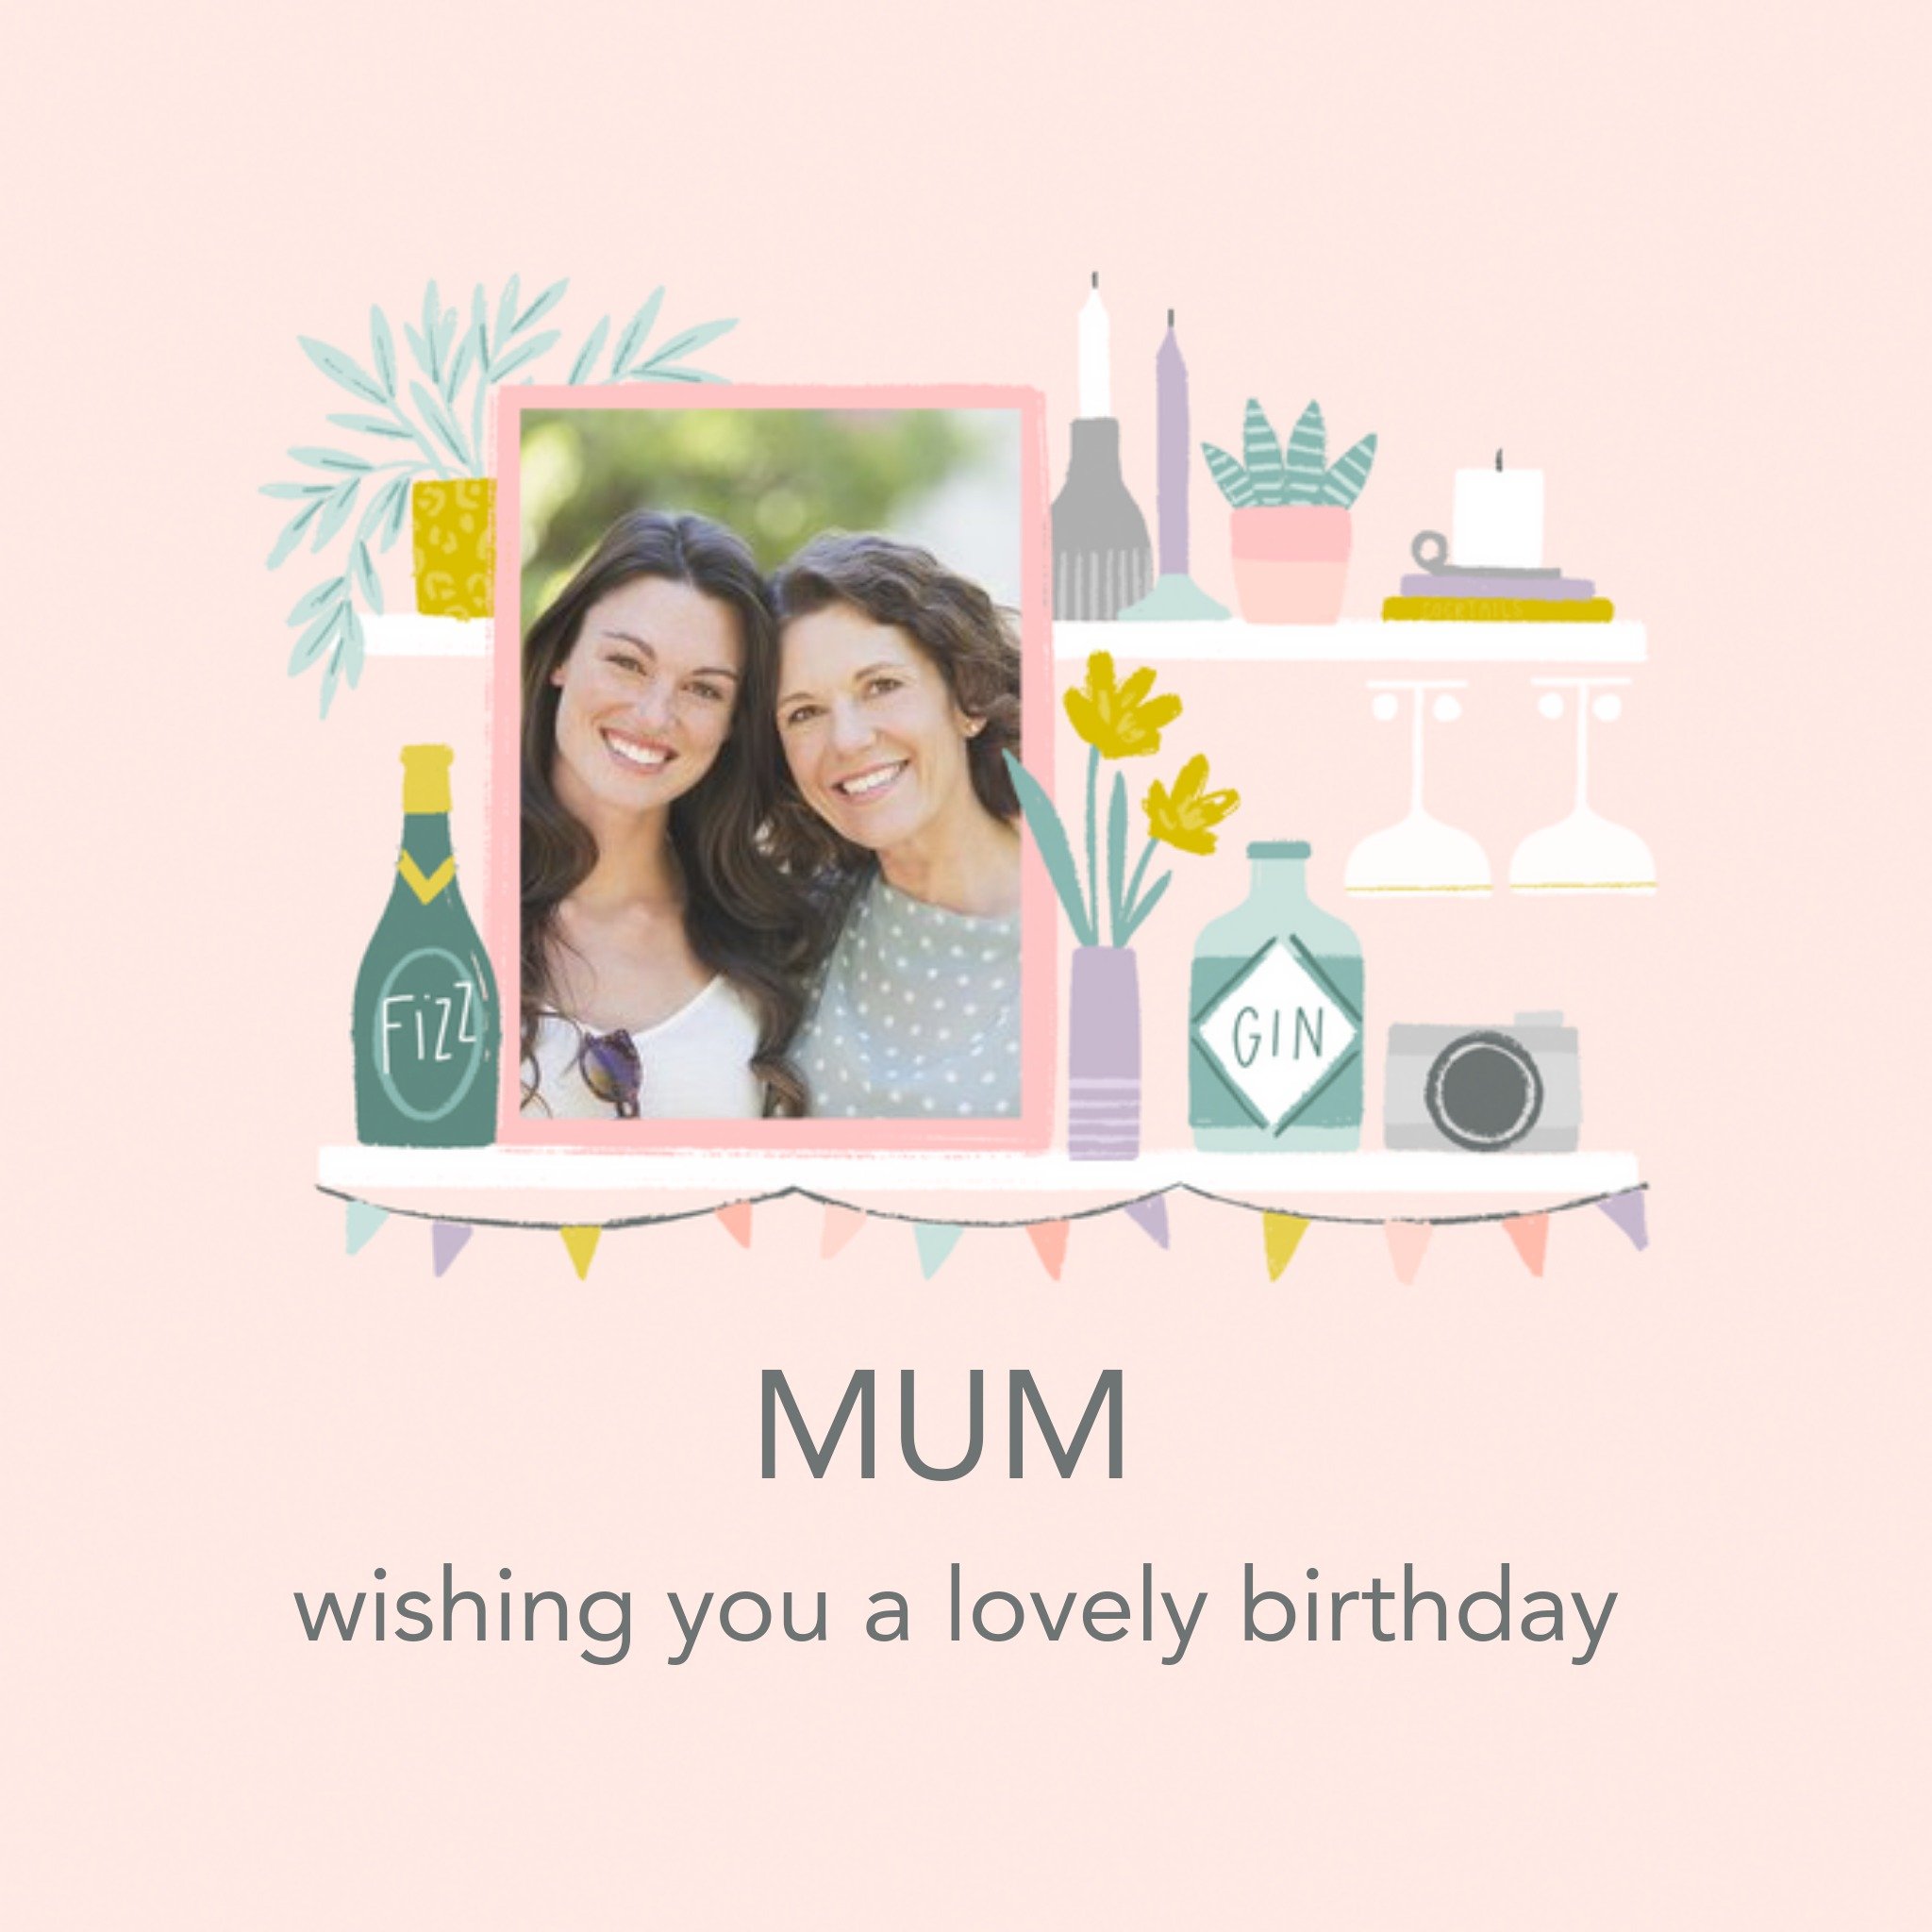 Moonpig Illustrated Shelves Champagne Gin Flowers Mum Photo Upload Birthday Card, Square